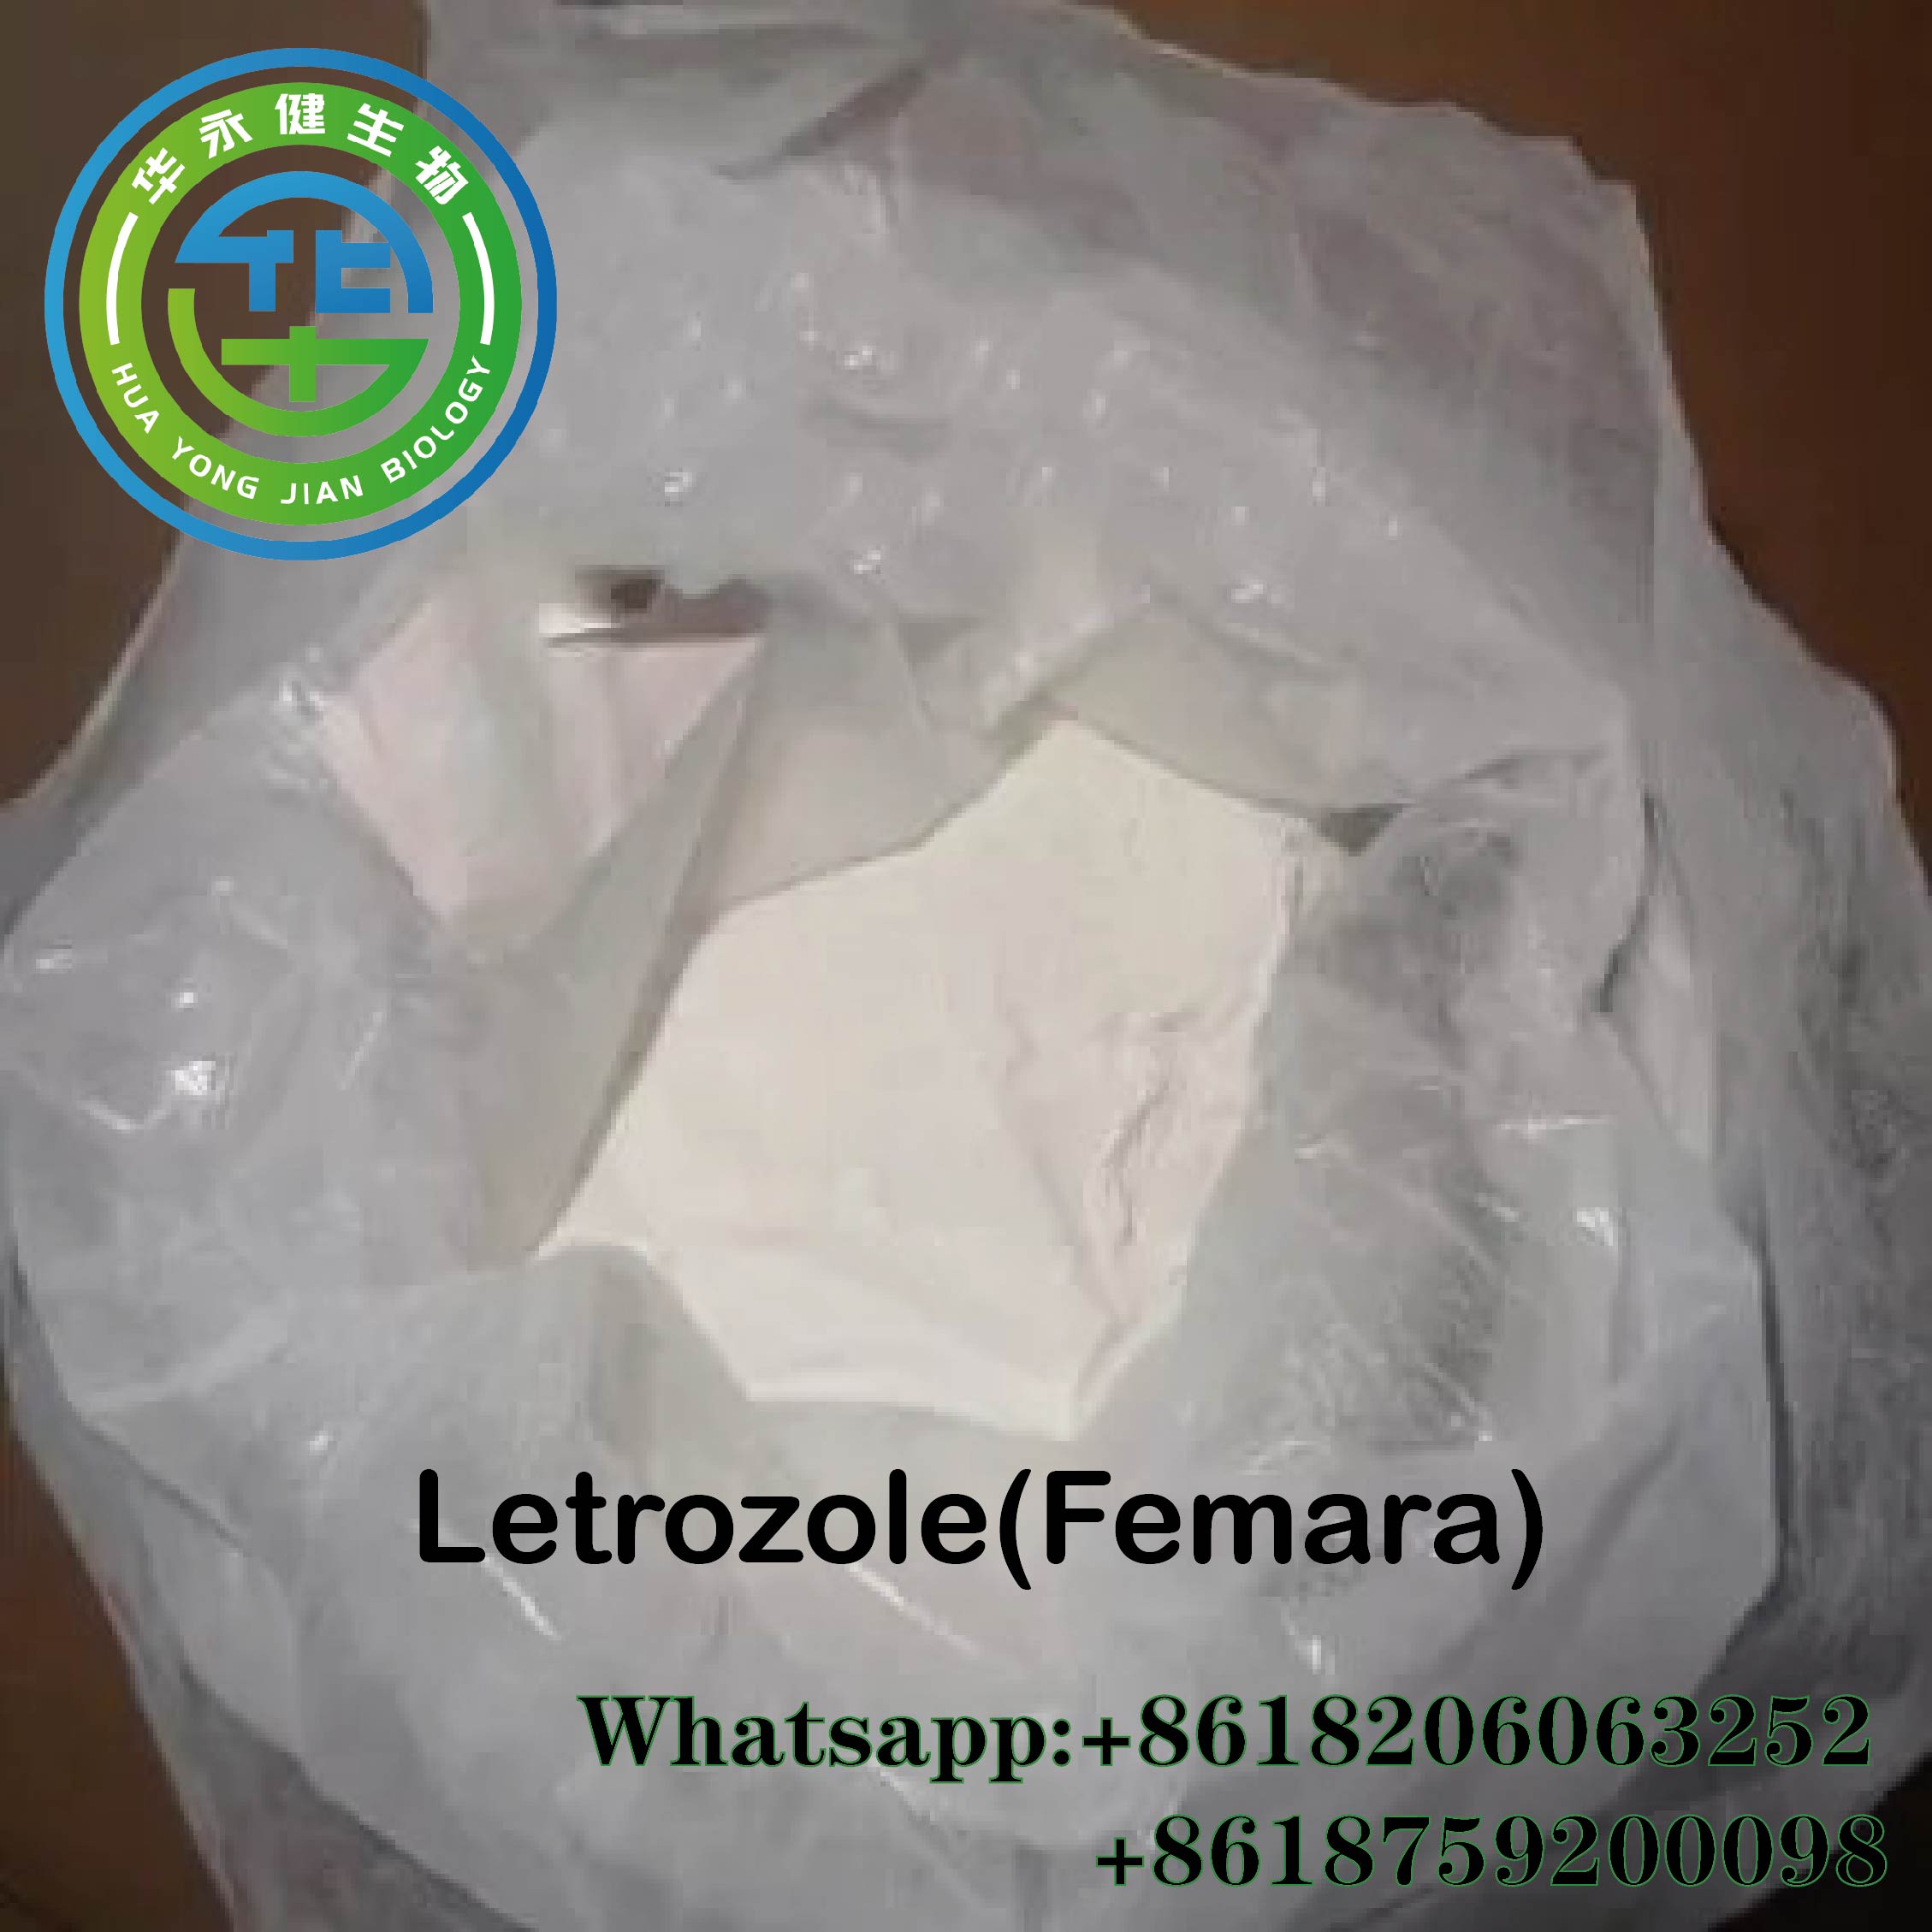 Pharmaceutical Letrozole Intermediates Raw Femara Steroids Powder for Muscle Growth CasNO.112809-51-5